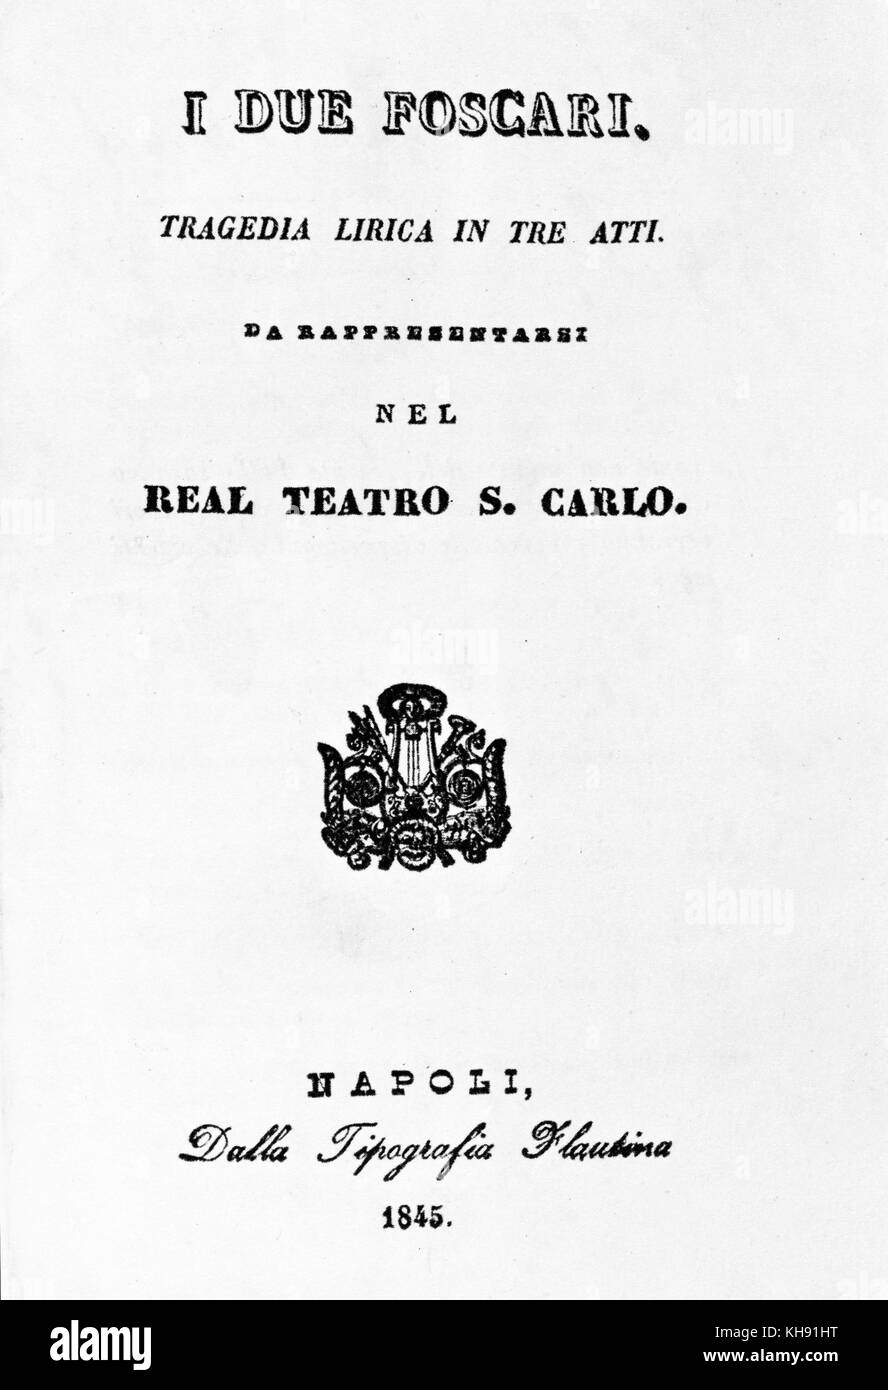 I Due Foscari - opera by Giuseppe Verdi. Titlepage, published Naples, Italy, 1845. GV: Italian composer,  9 or 10 October 1813 - 27 January 1901. Stock Photo